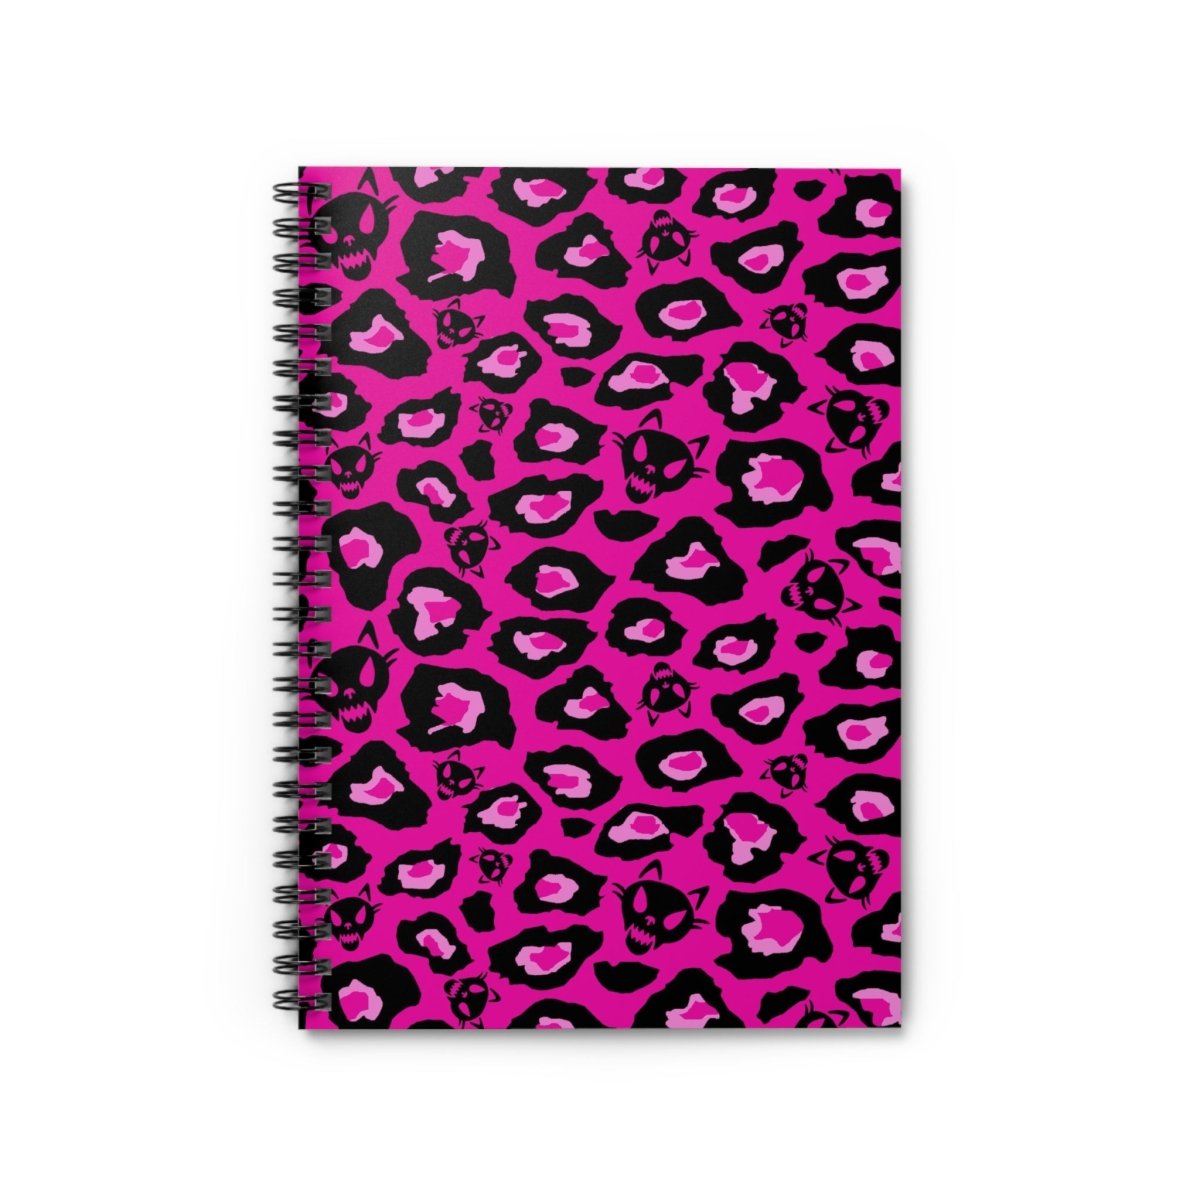 Too Fast | Cat Skull Leopard Print Spiral Notebook